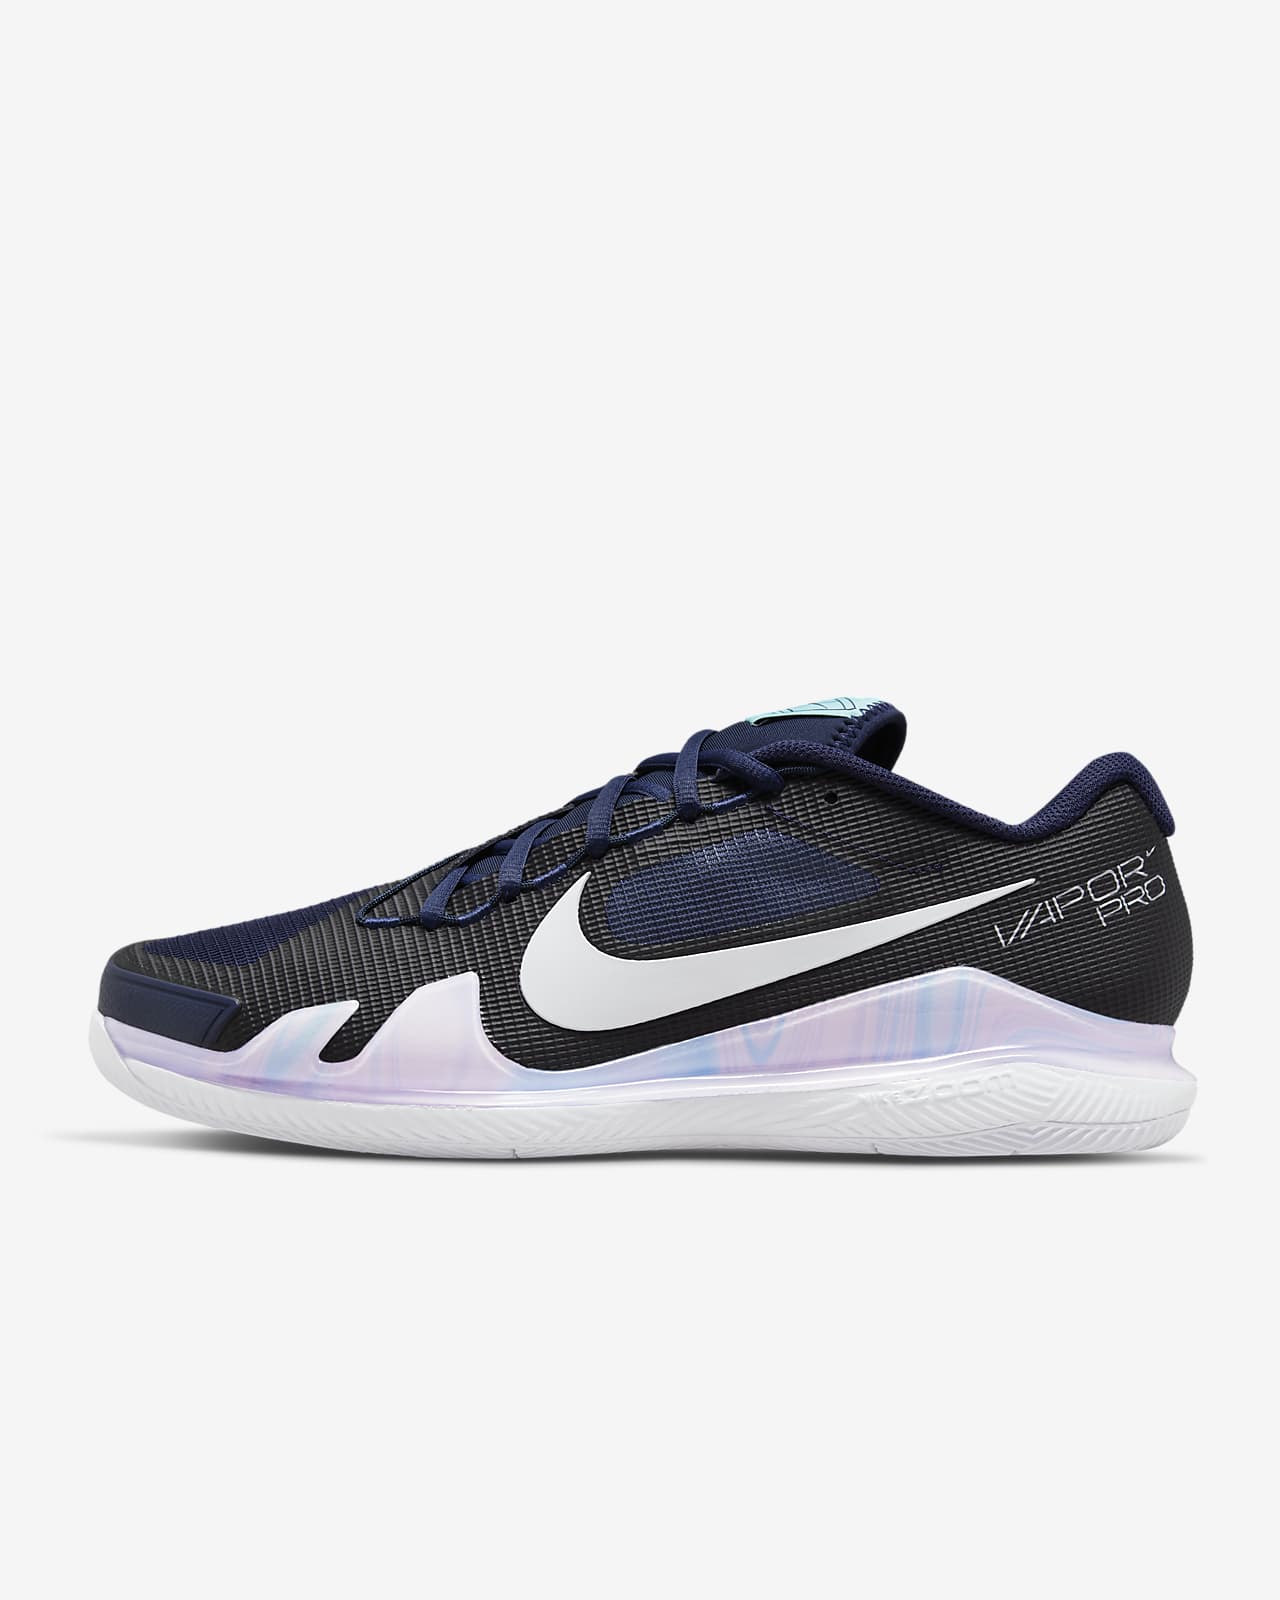 NikeCourt Air Zoom Vapor Pro Men's Hard-Court Tennis Shoe